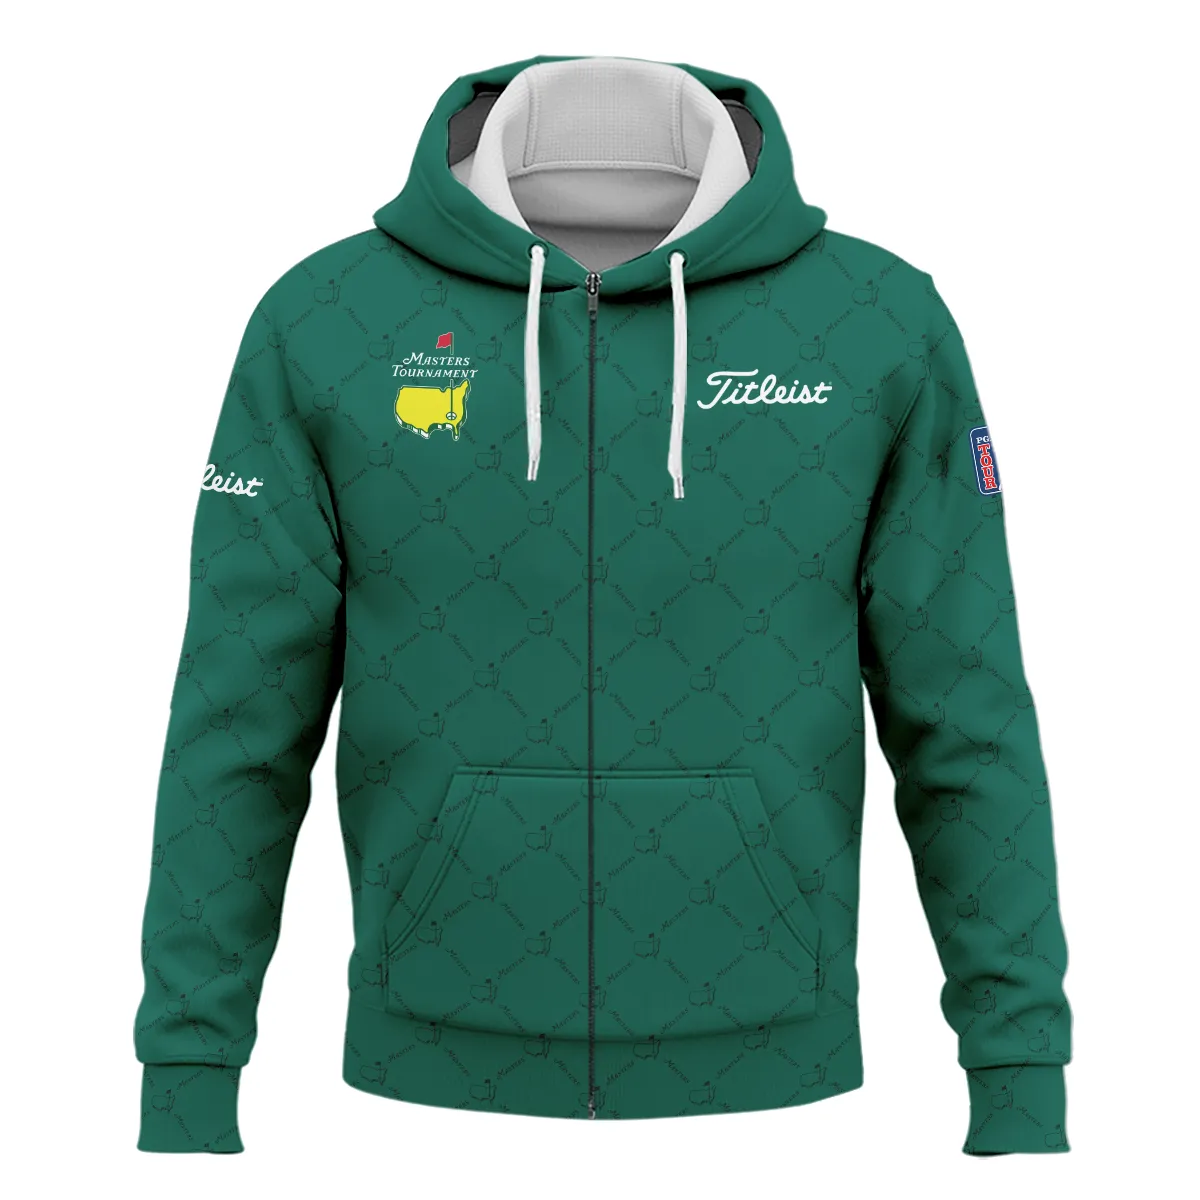 Golf Sport Pattern Color Green Mix Black Masters Tournament Titleist Zipper Hoodie Shirt Style Classic